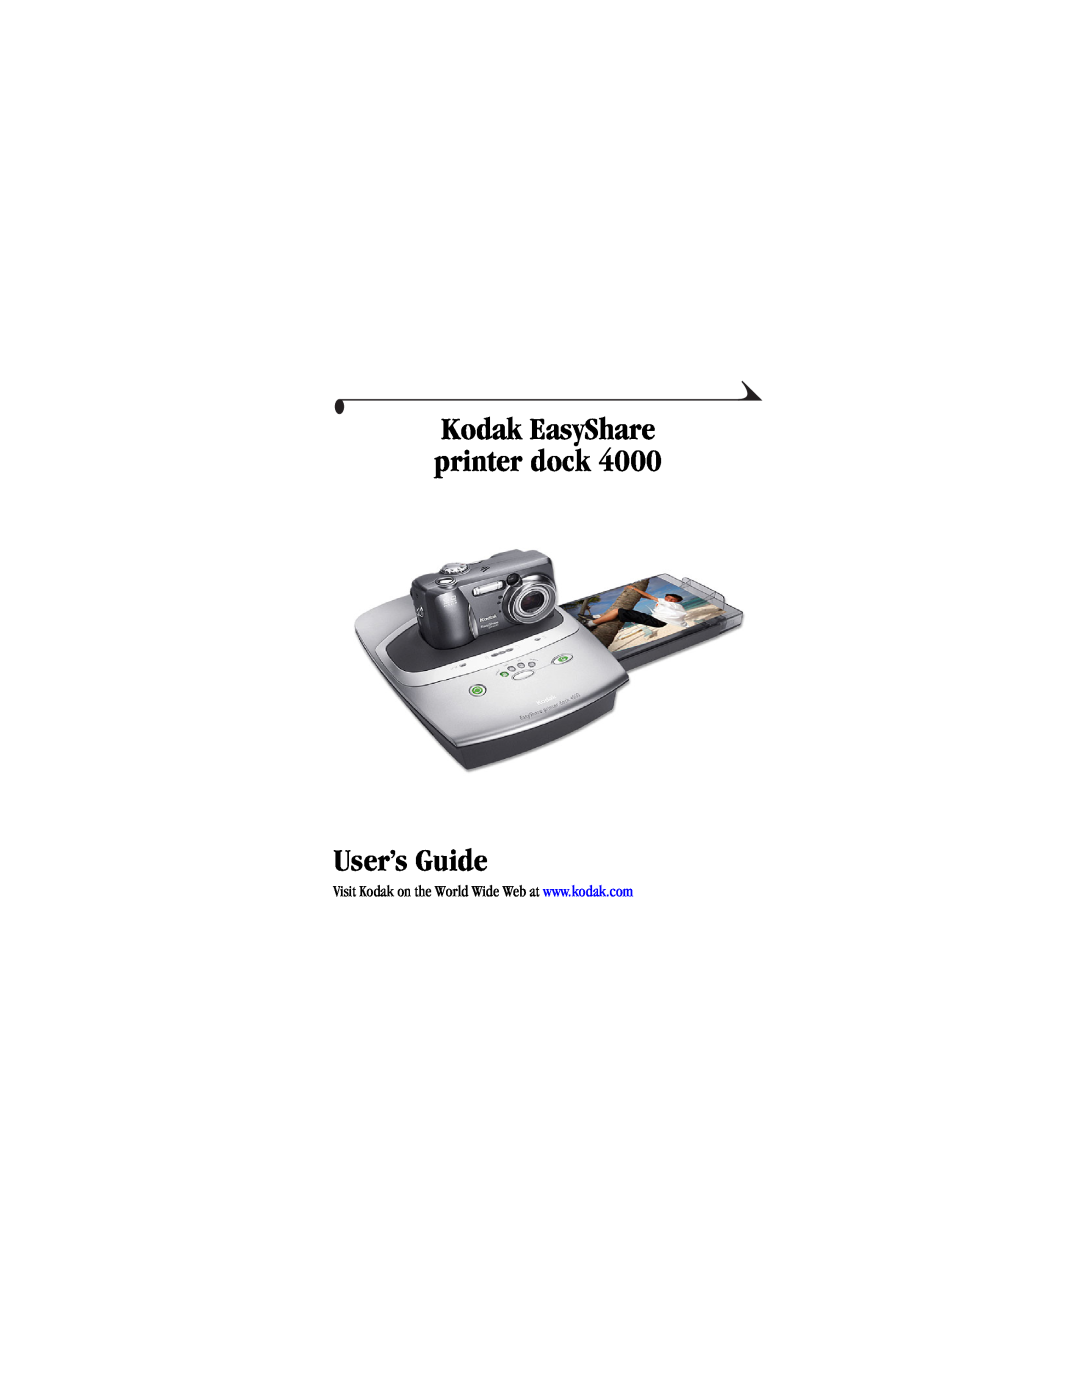 Kodak 4000 manual User’s Guide, Kodak EasyShare printer dock 